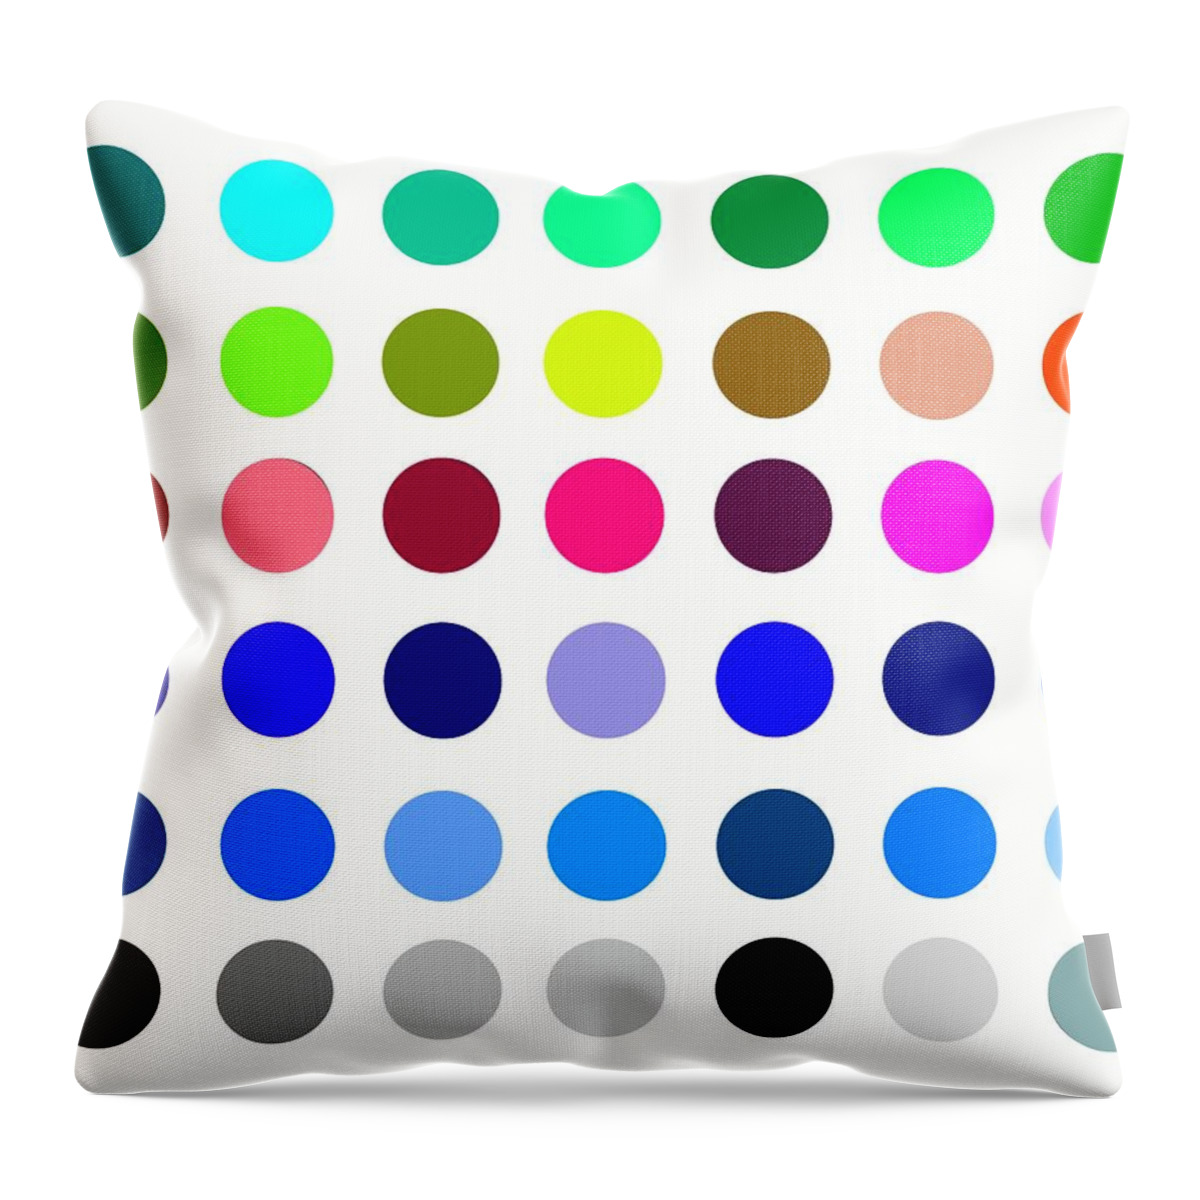 Polkadot Throw Pillow featuring the digital art Rainbow Polkadot and White by Marianna Mills